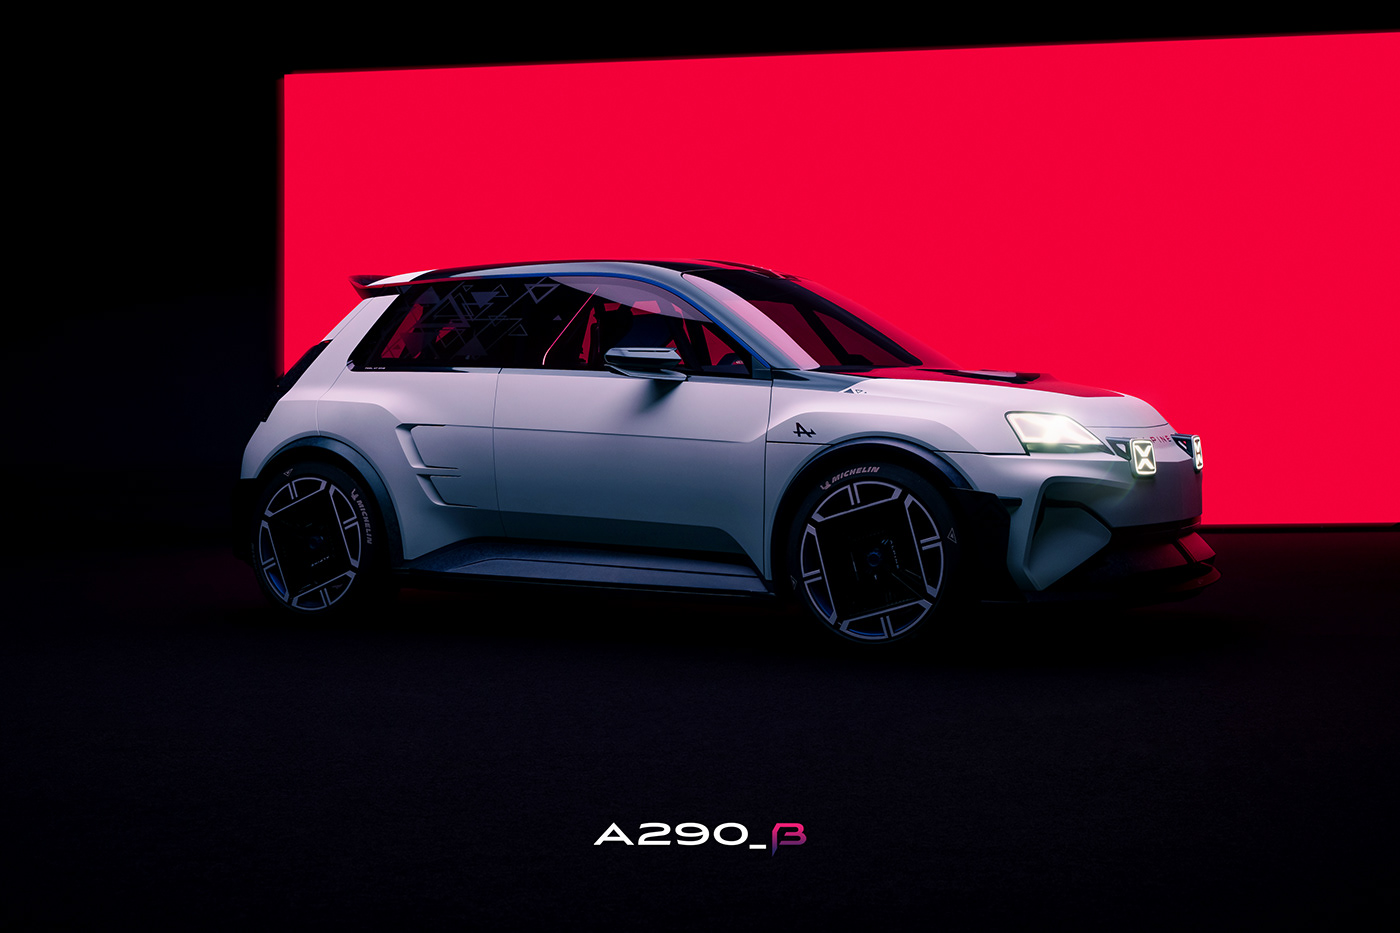 alpine Cars concept brand identity Social media post visual identity cardesign conceptcar